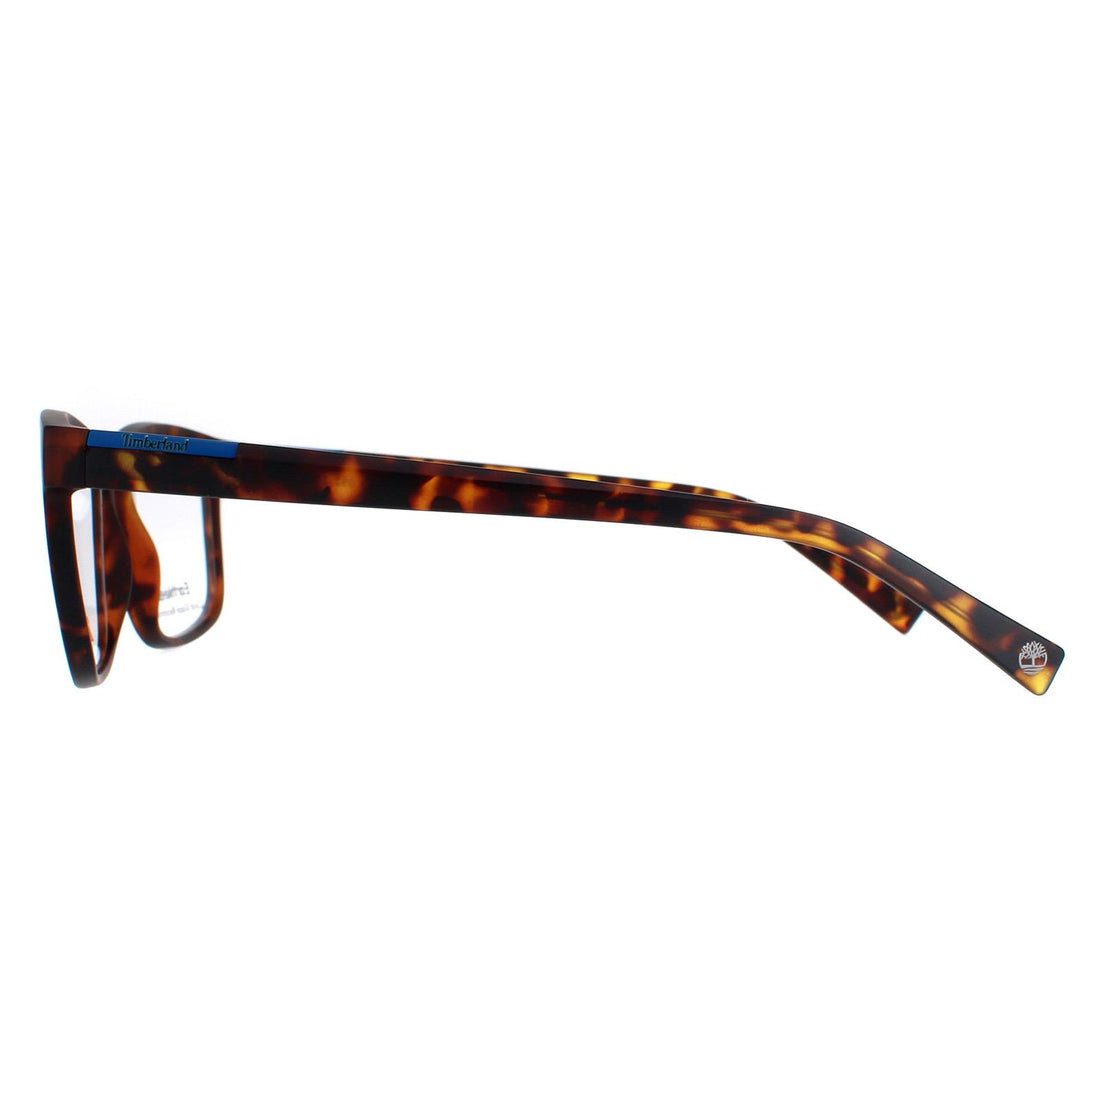 Timberland TB1663 Glasses Frames